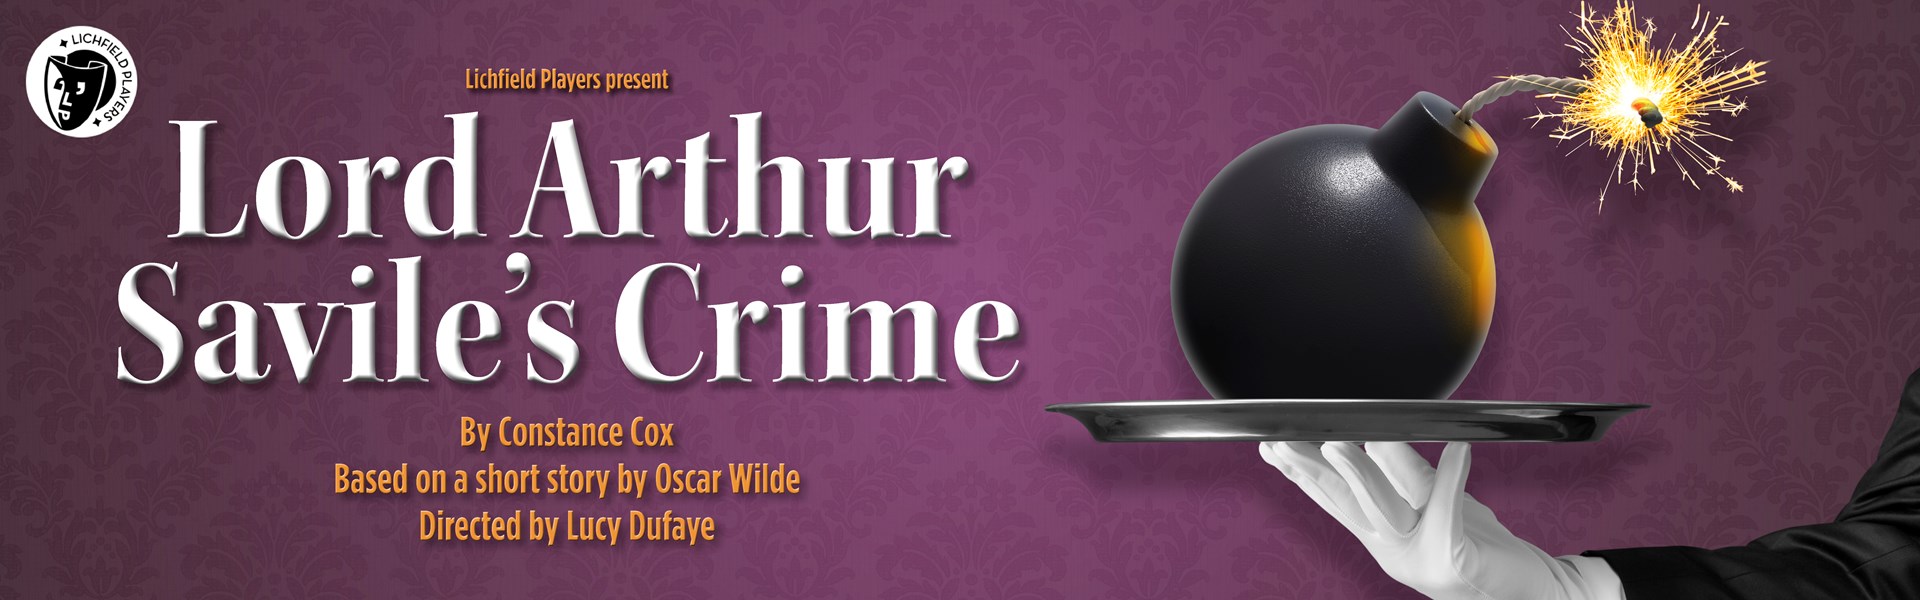 Lord Arthur Savile's Crime - Lichfield Players